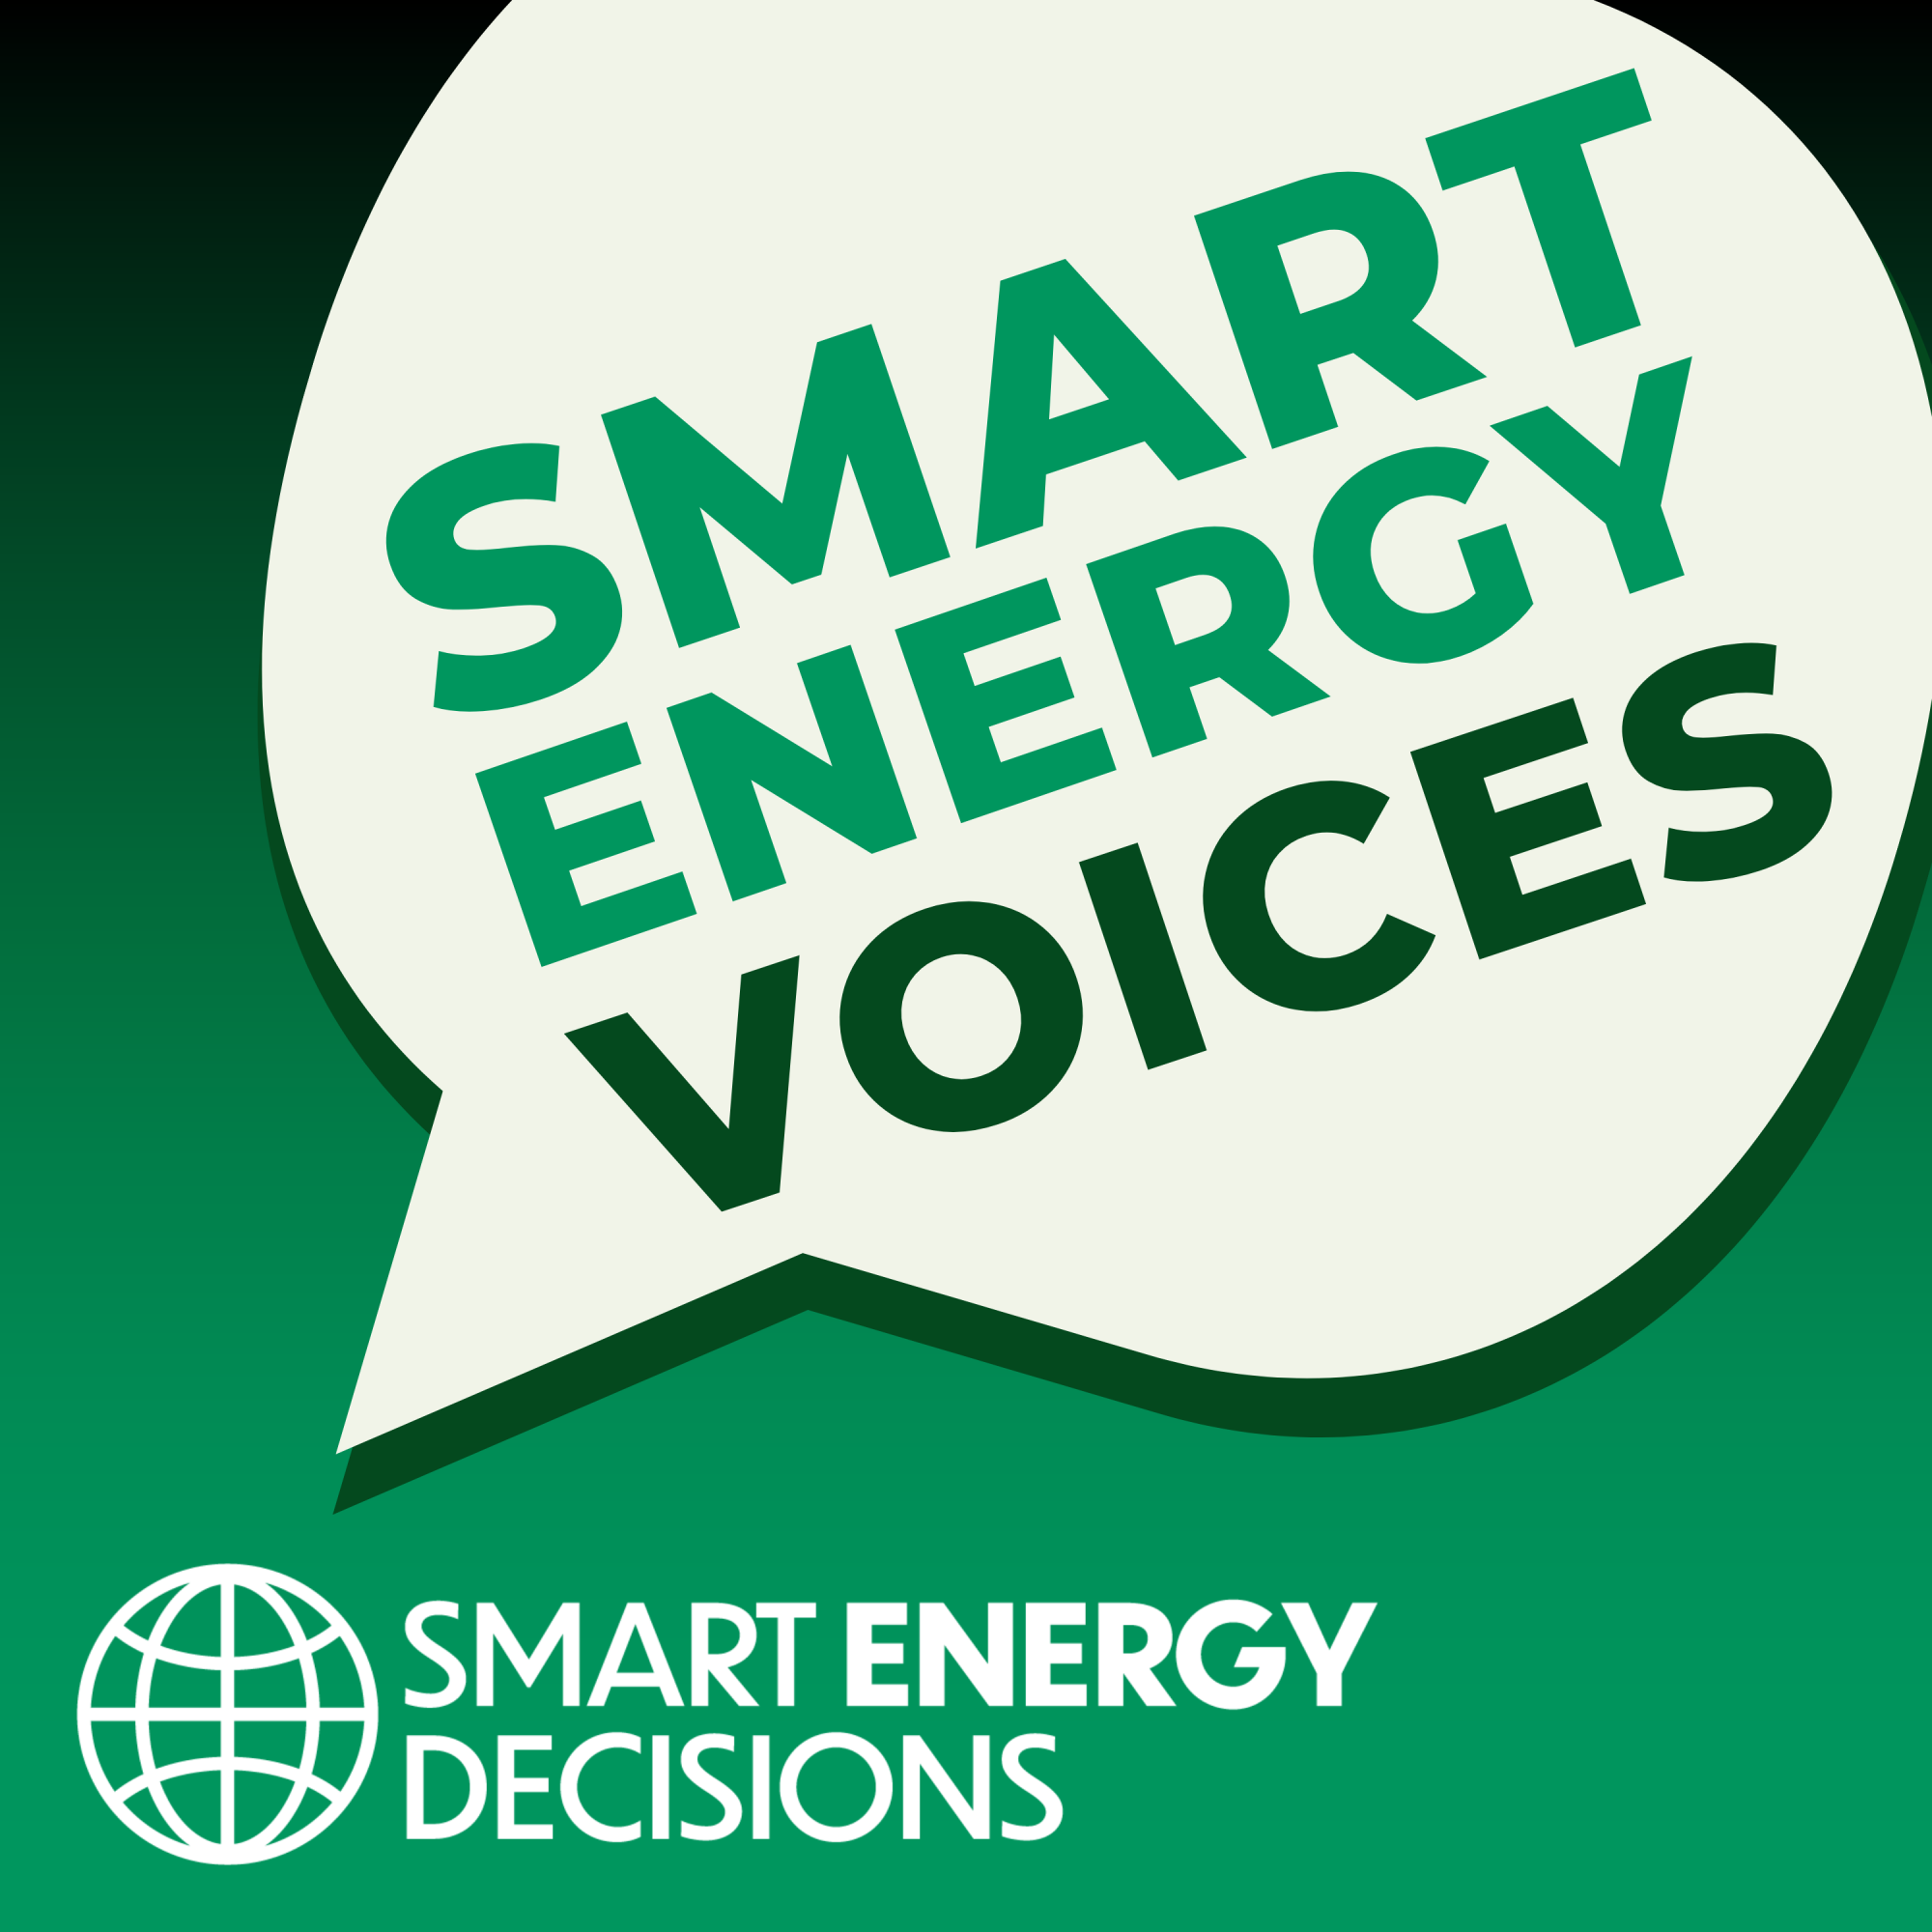 Smart Energy Voices Episode 78: Meeting Renewable Energy Goals - A Portfolio View with VF Corporation